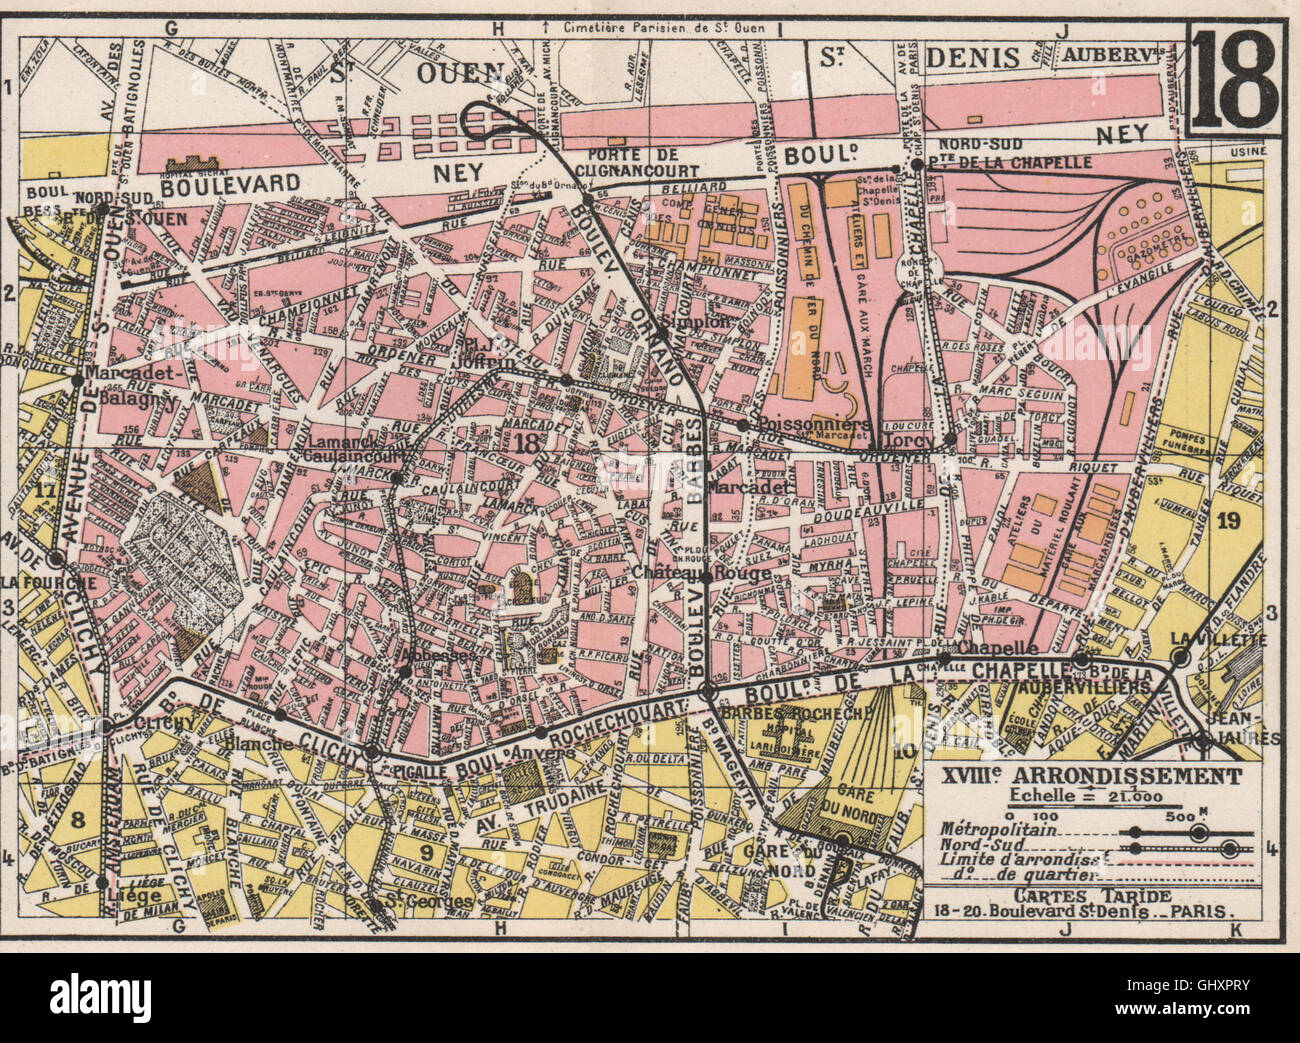 PARIS. 18. 18e XVIII. Arrondissement. Butte Montmartre. TARIDE, 1926 alte Karte Stockfoto